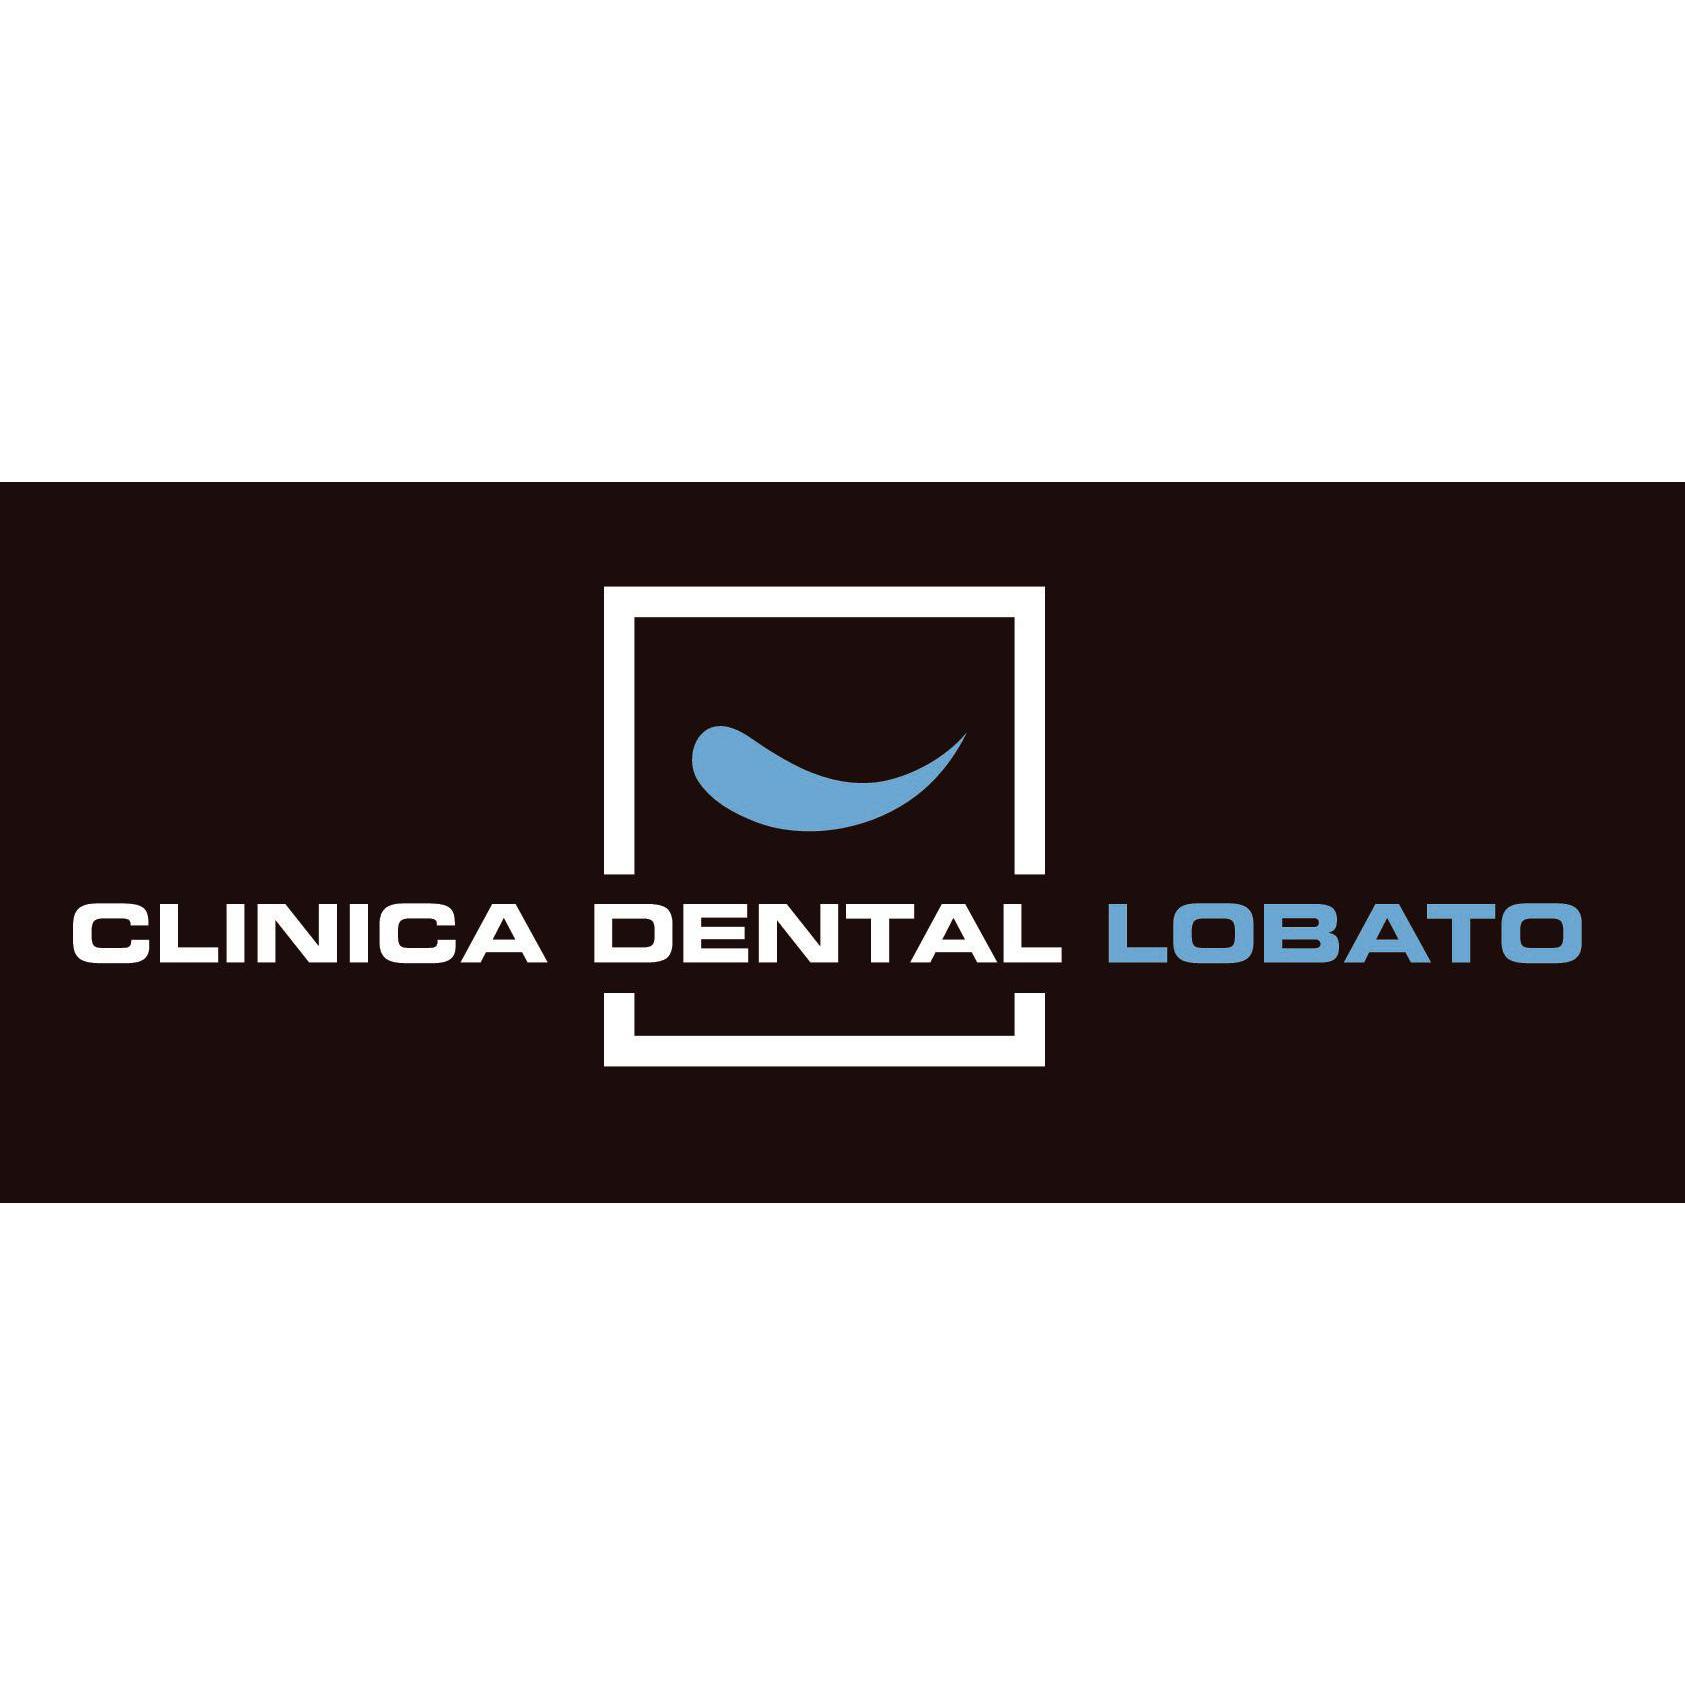 Clinica Dental Lobato Logo